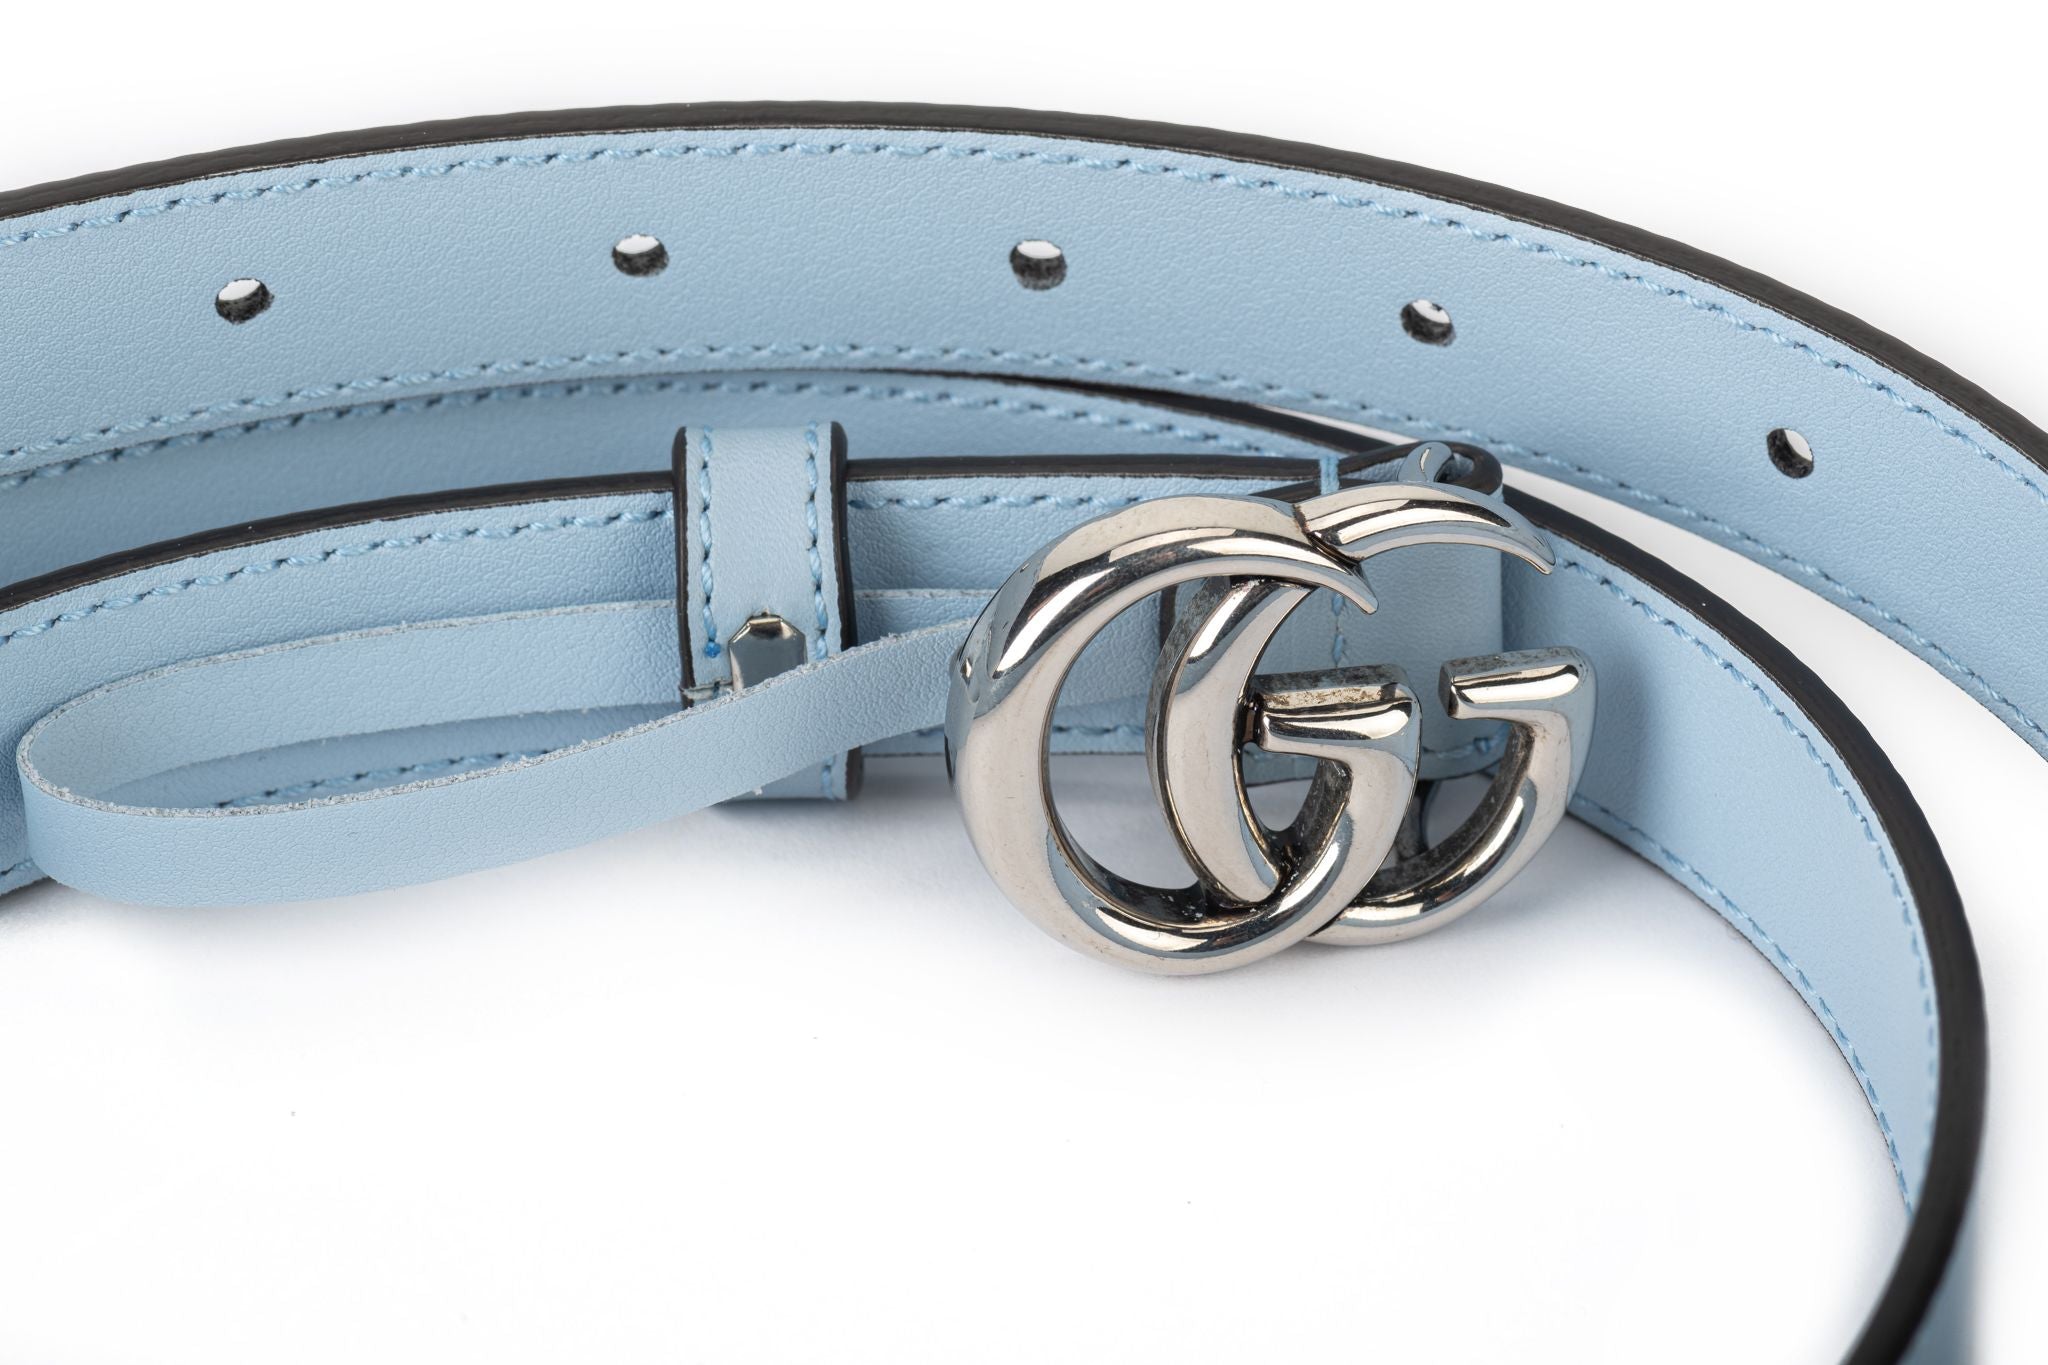 Gucci BN Celeste Leather GG Thin Belt - Vintage Lux